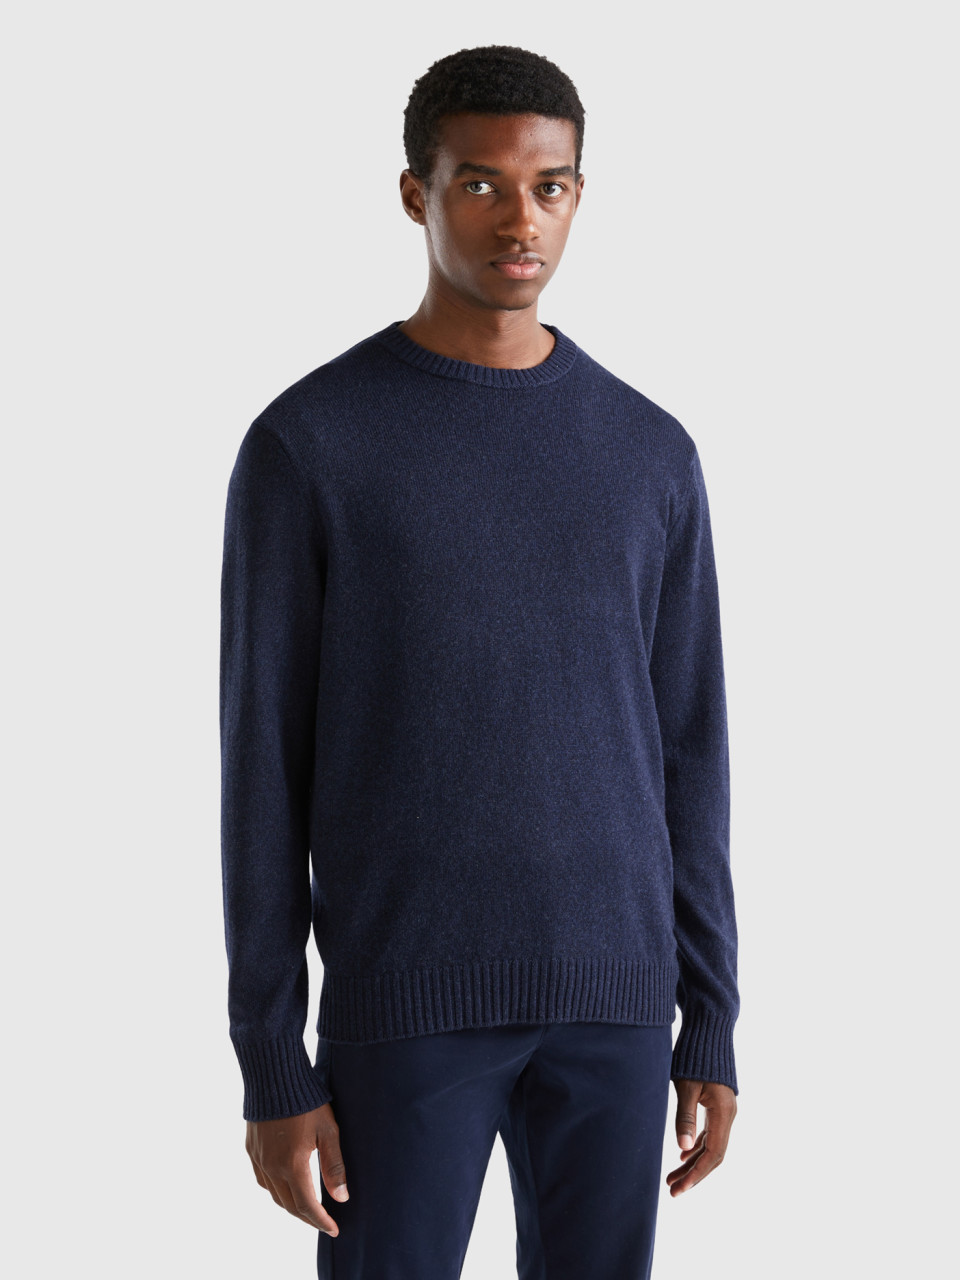 Benetton, Crew Neck Sweater In Cashmere And Wool Blend, Dark Blue, Men